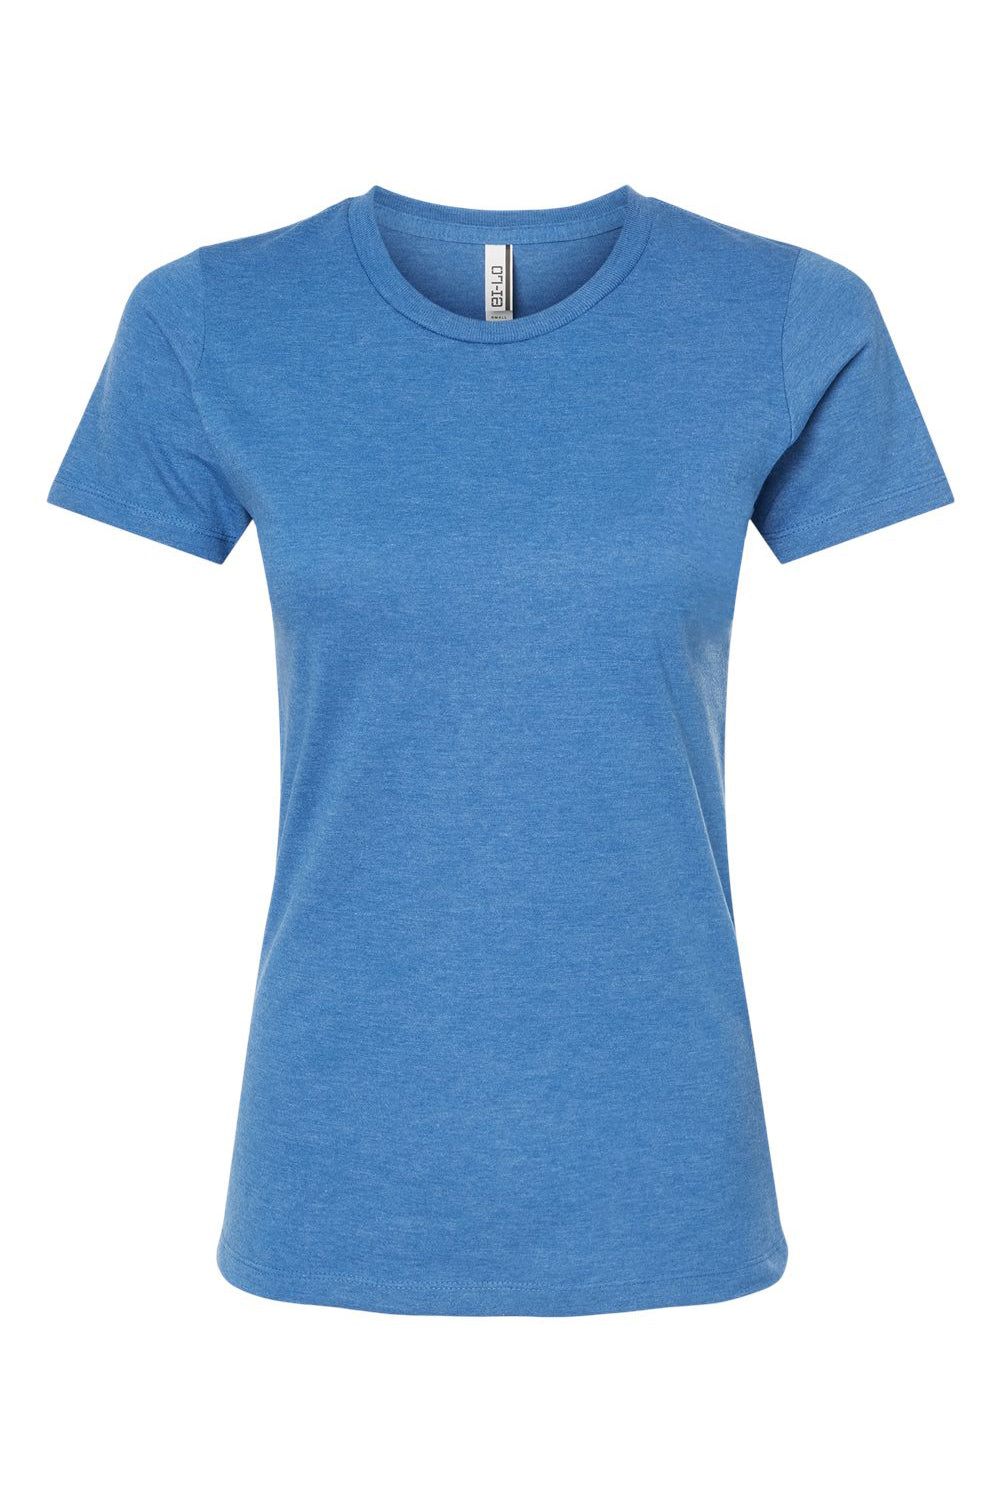 Tultex 542 Womens Premium Short Sleeve Crewneck T-Shirt Heather Royal Blue Flat Front